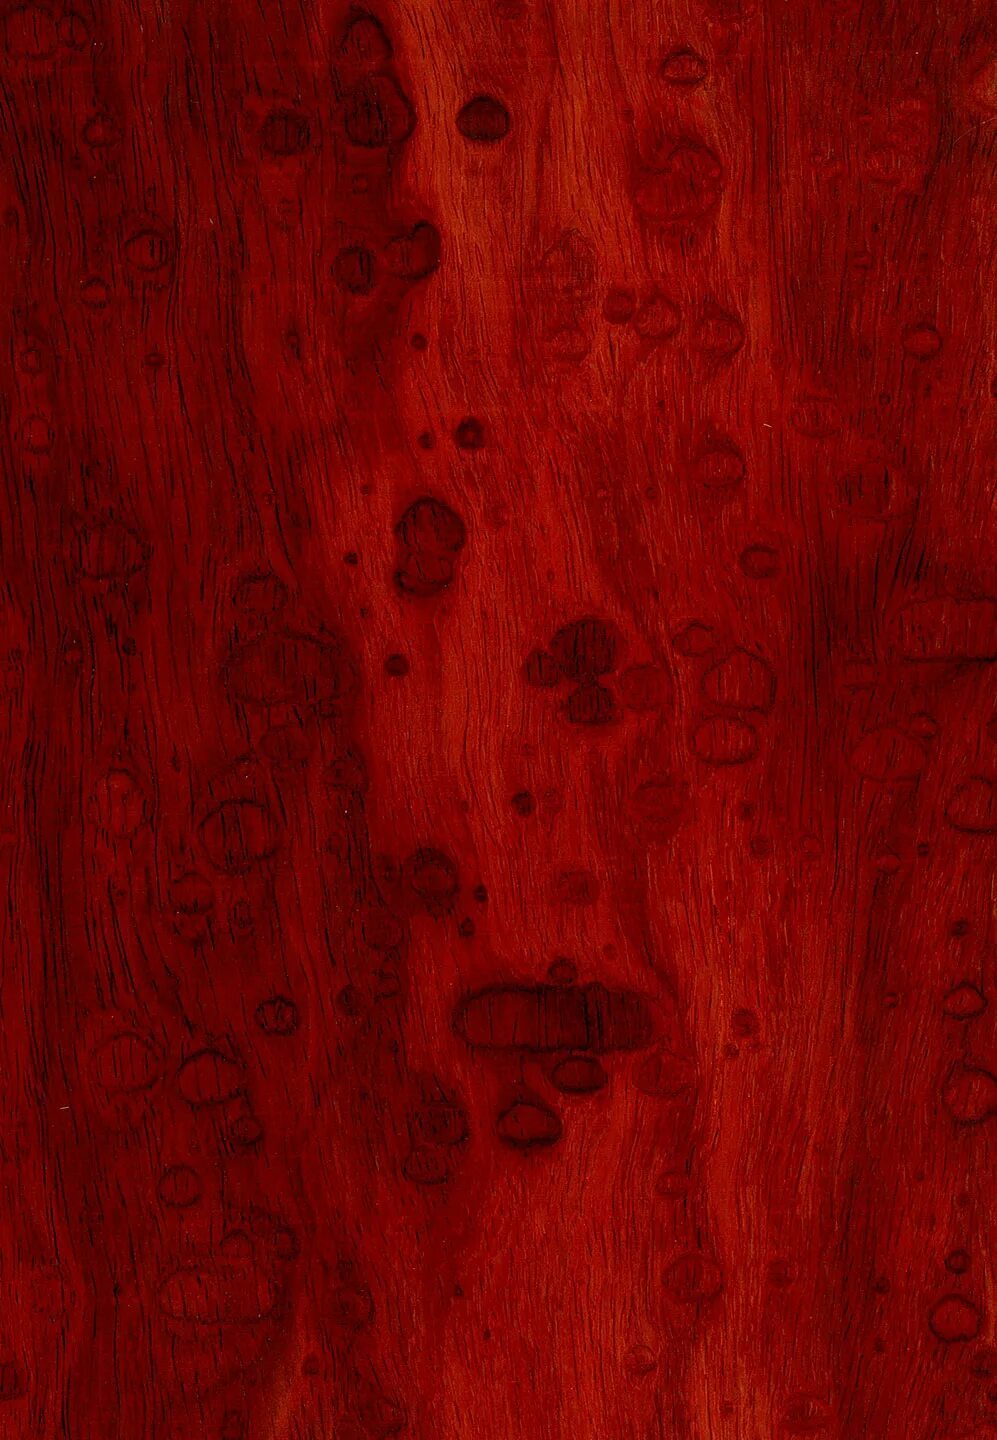 Красное дерево подгон 3. Древесина красное дерево красный Падук. Красное сандаловое дерево древесина. Красное дерево текстура.